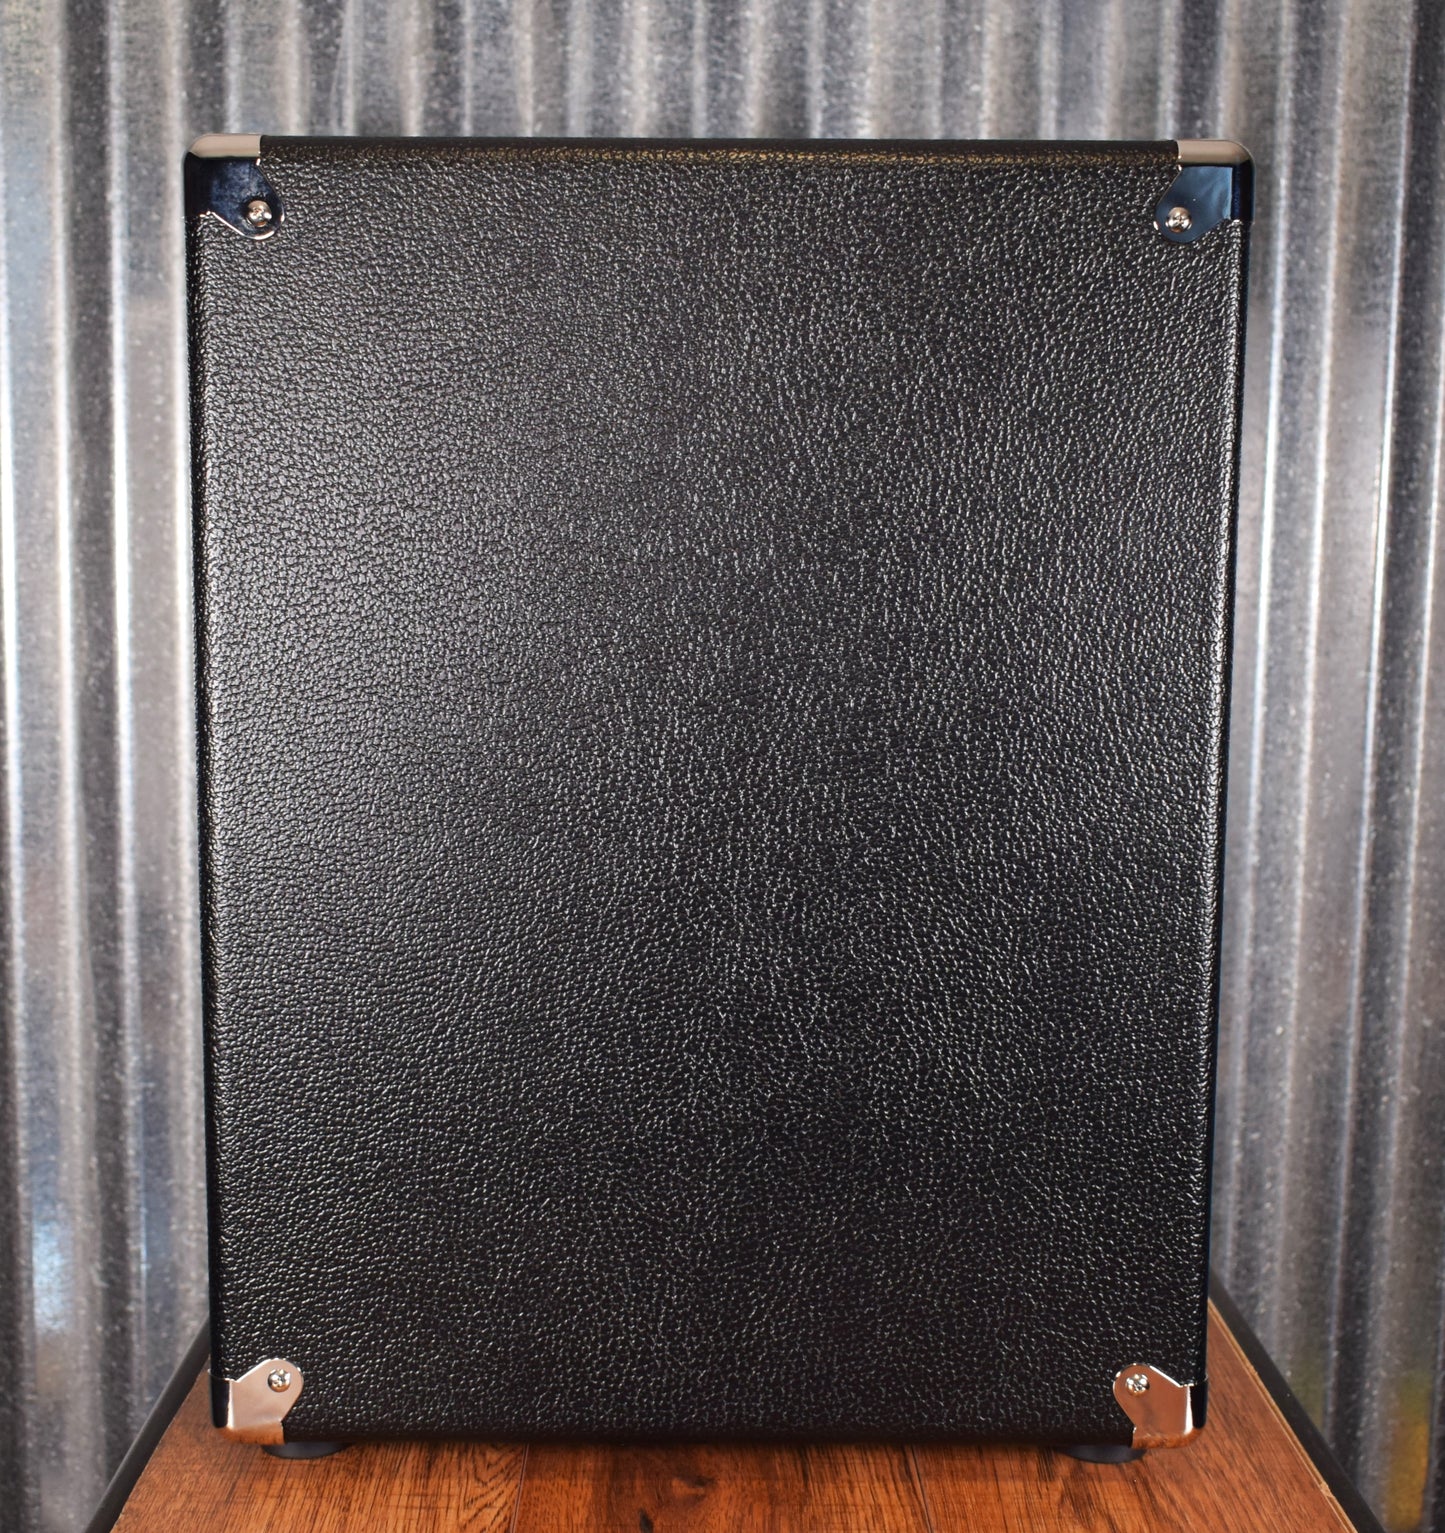 Genzler NC-112T NU CLASSIC 1x12” & Tweeter 300 Watt 8 ohm Bass Amplifier Speaker Cabinet